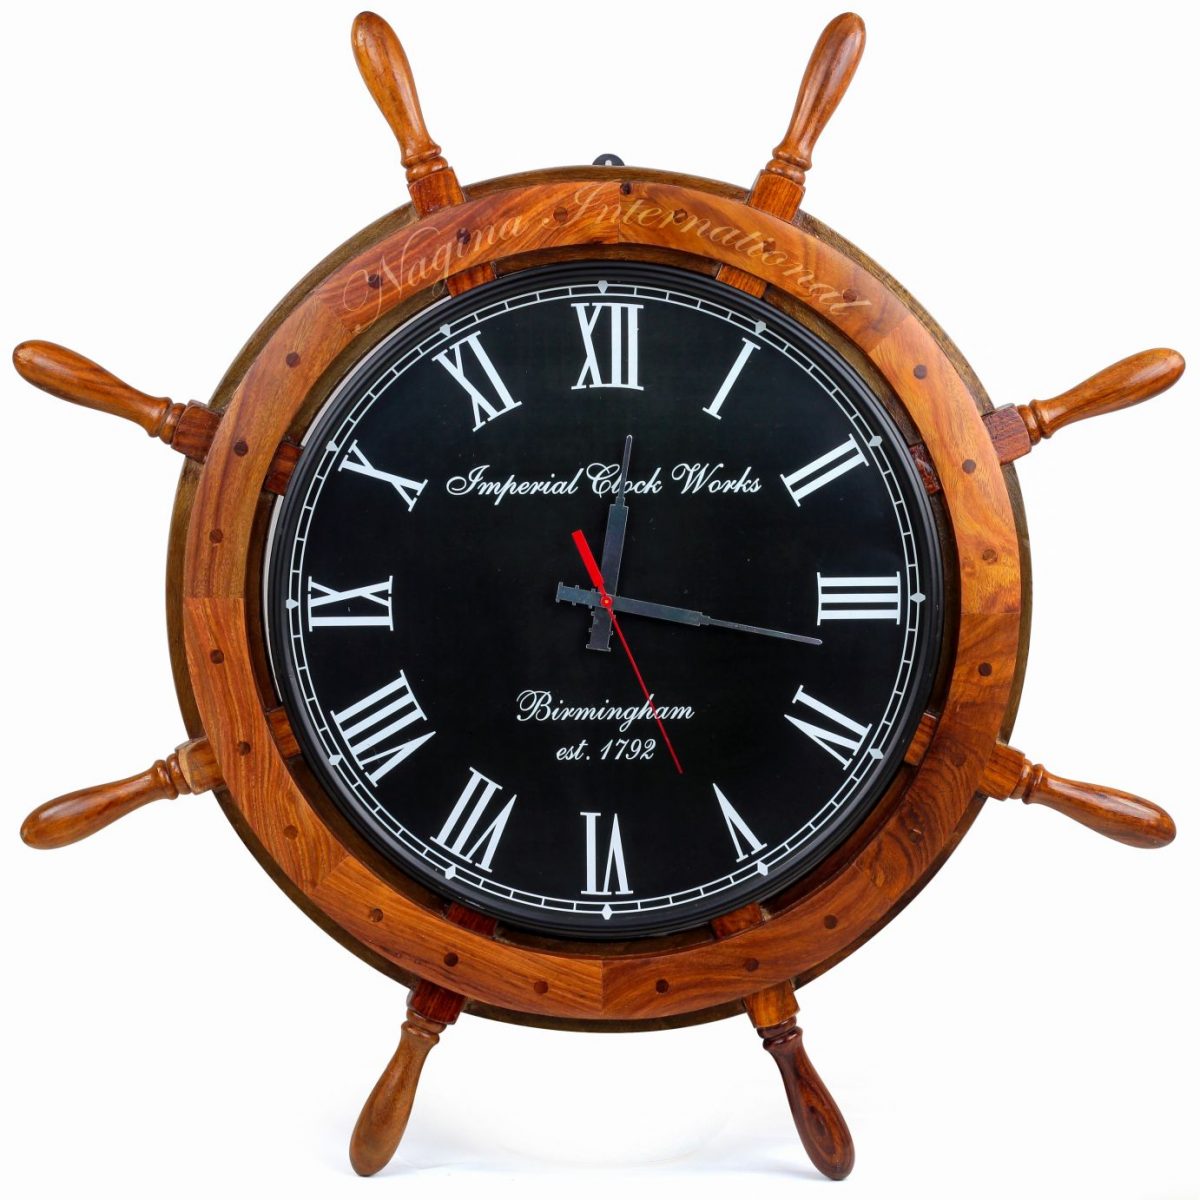 30" Nautical Ship Wheel Black Dial Imperial Clock Works (Birmingham) | Vintage Colonial Style Wall Hanging Decor & Clock | Ocean Gifts Ideas | Nagina International